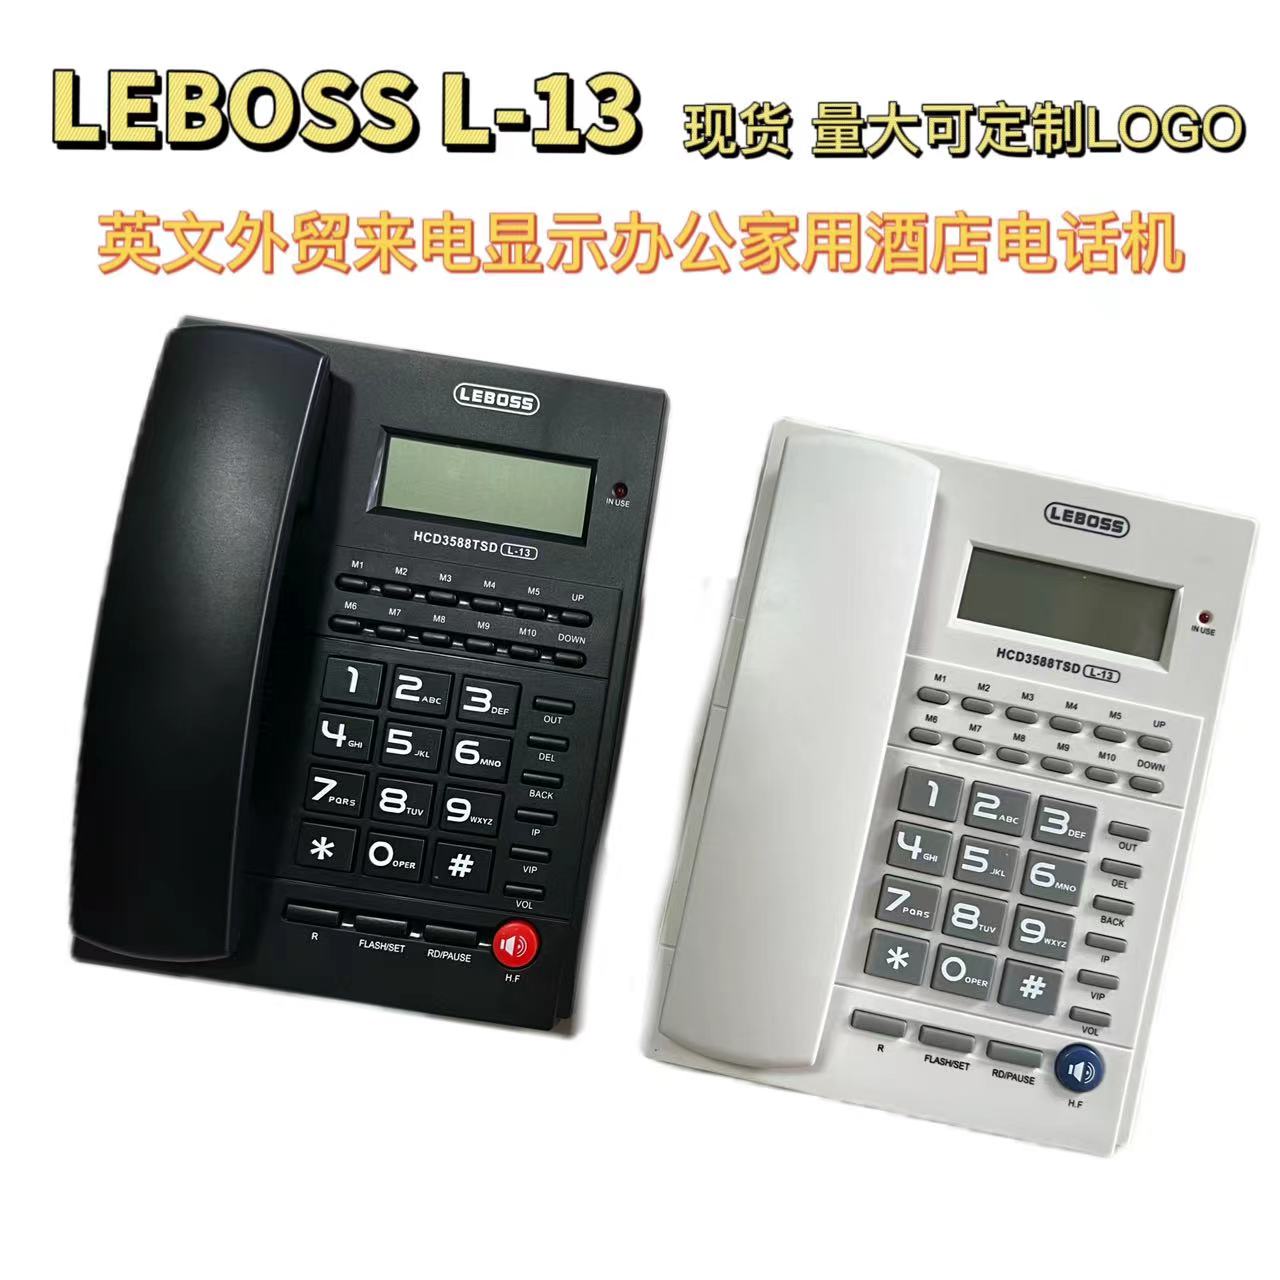 LEBOSS L-13厂家直供外贸跨境英文电话机来电显示商务电话机图